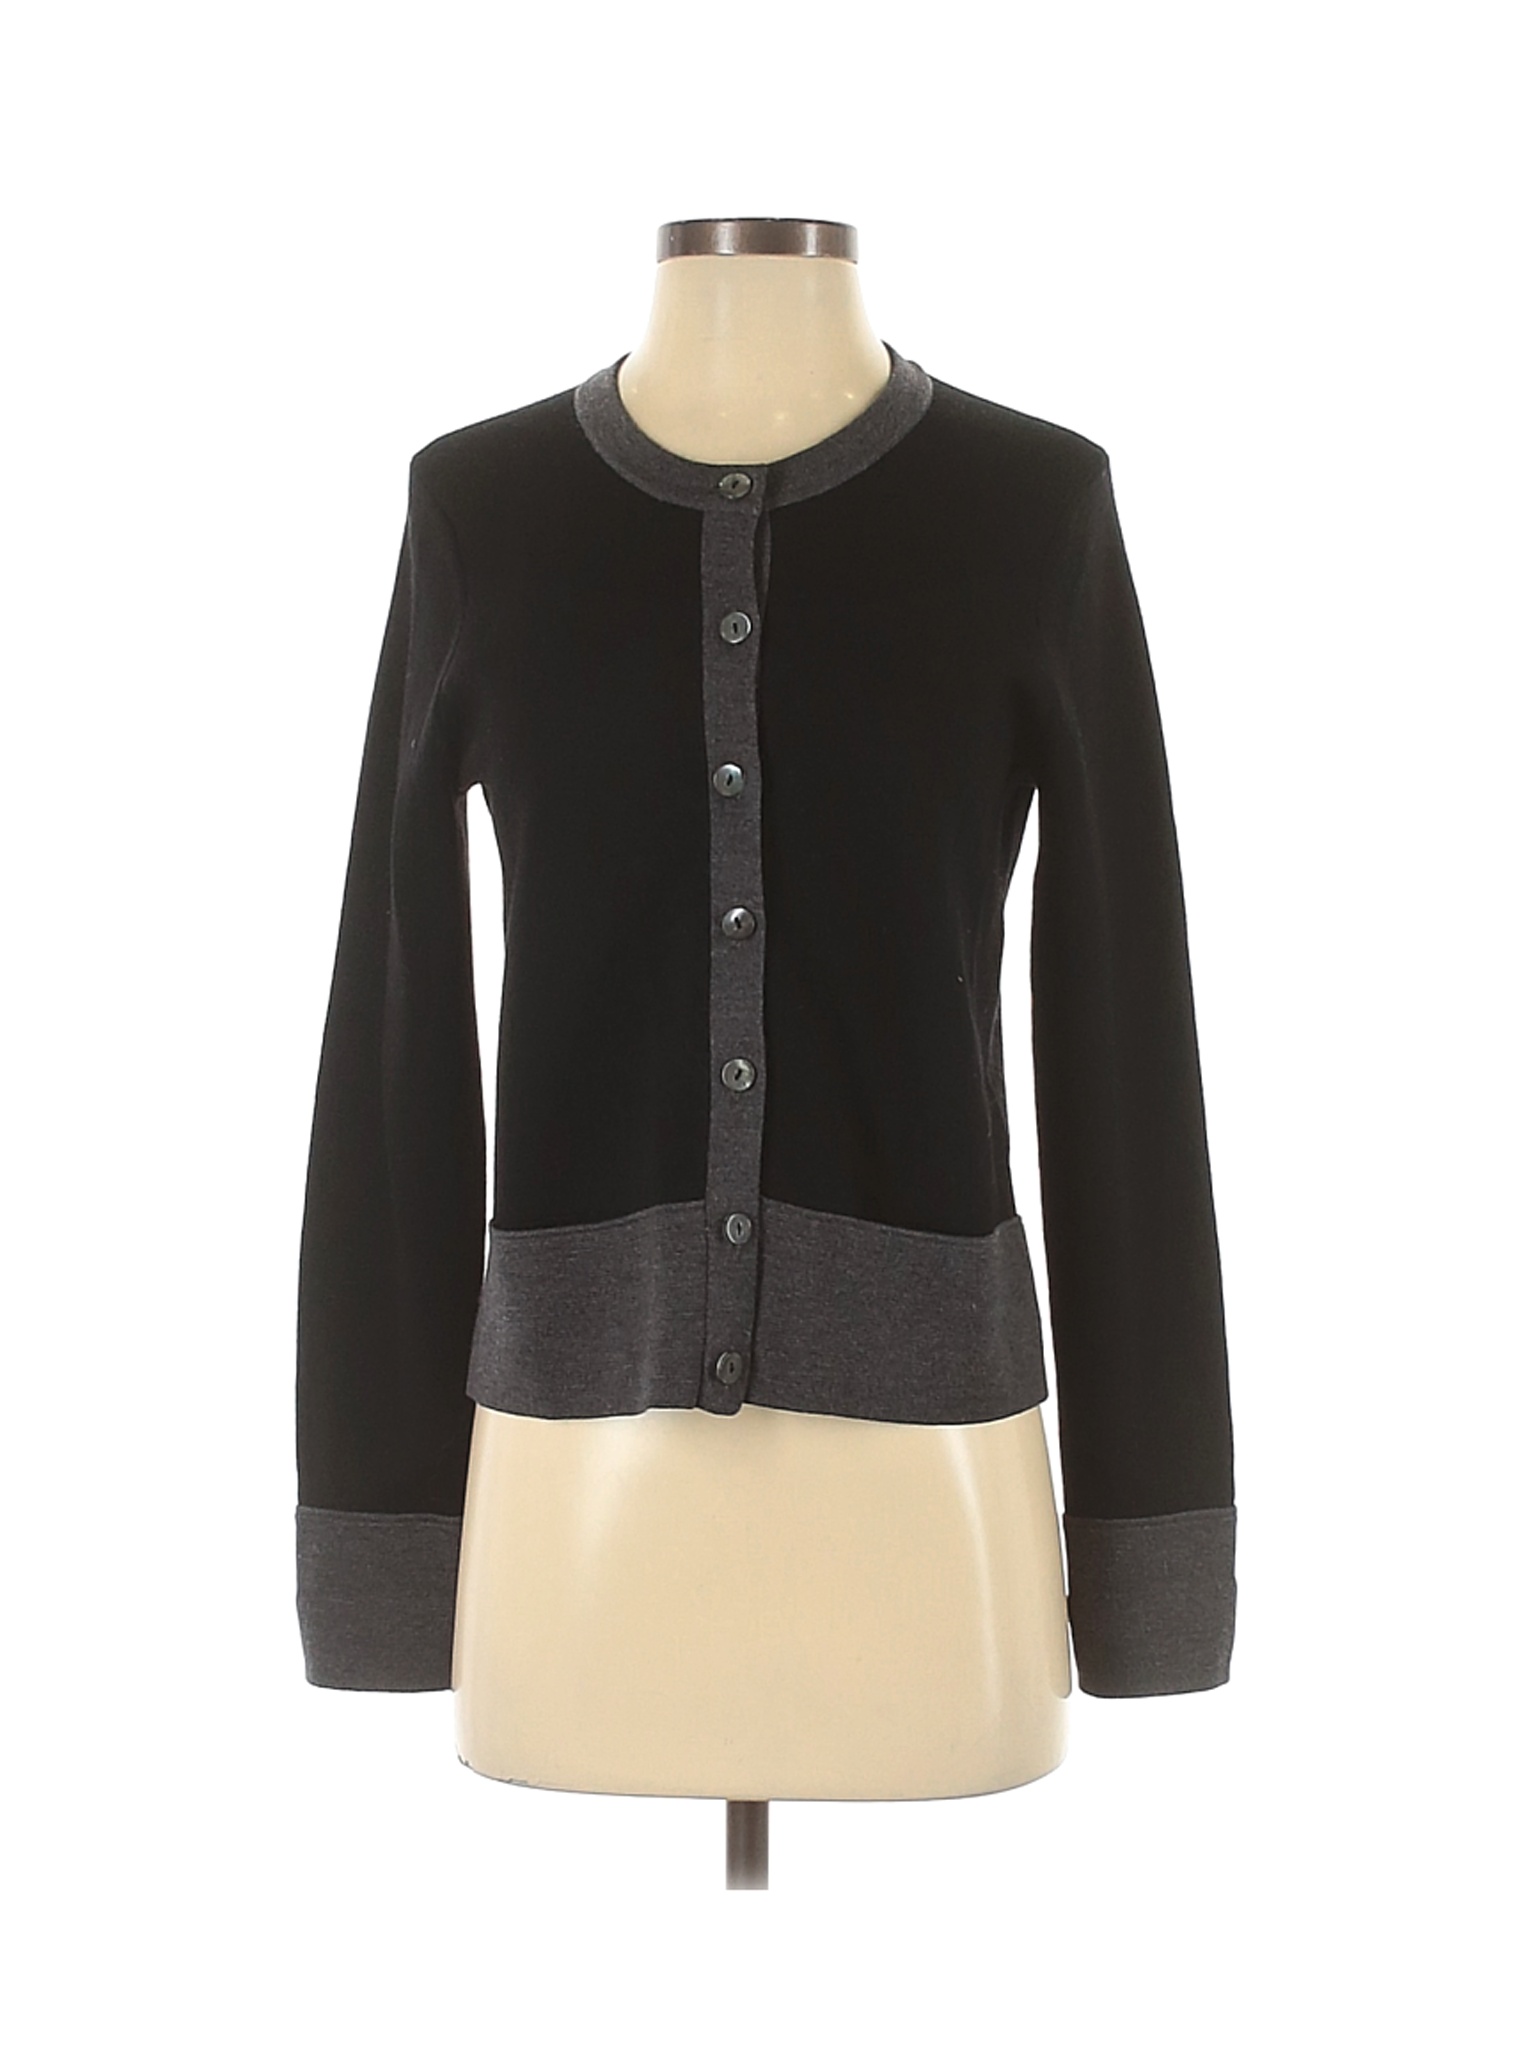 Brooks Brothers Women Black Wool Cardigan S | eBay